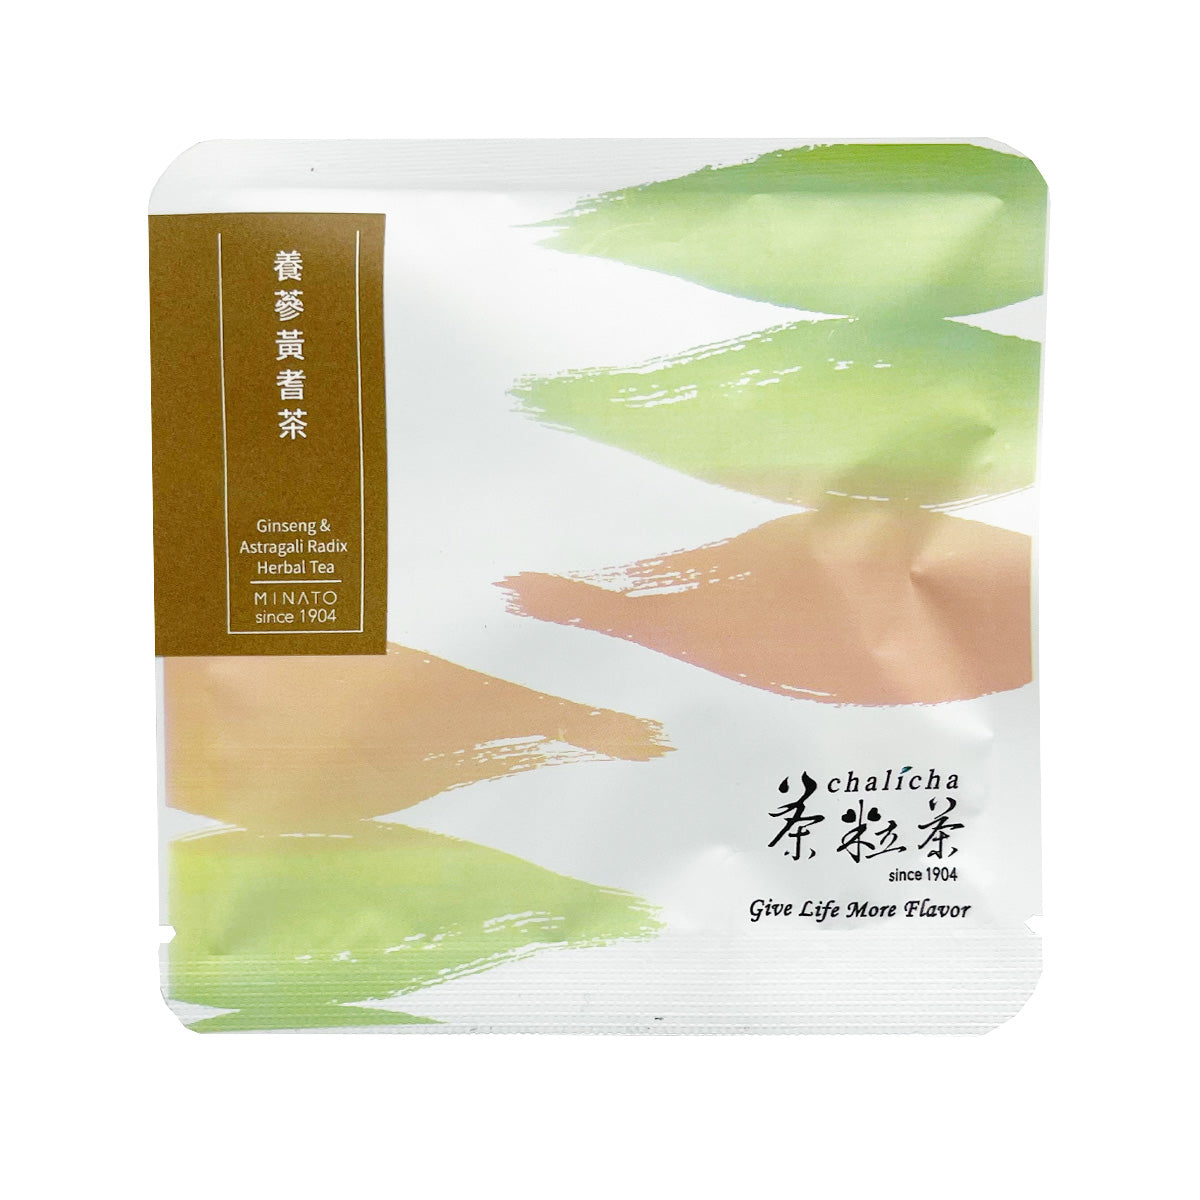 【 MINATO 】 Ginseng & Astragali Radix Herbal Tea (temple tea bag) 4g*1pcs